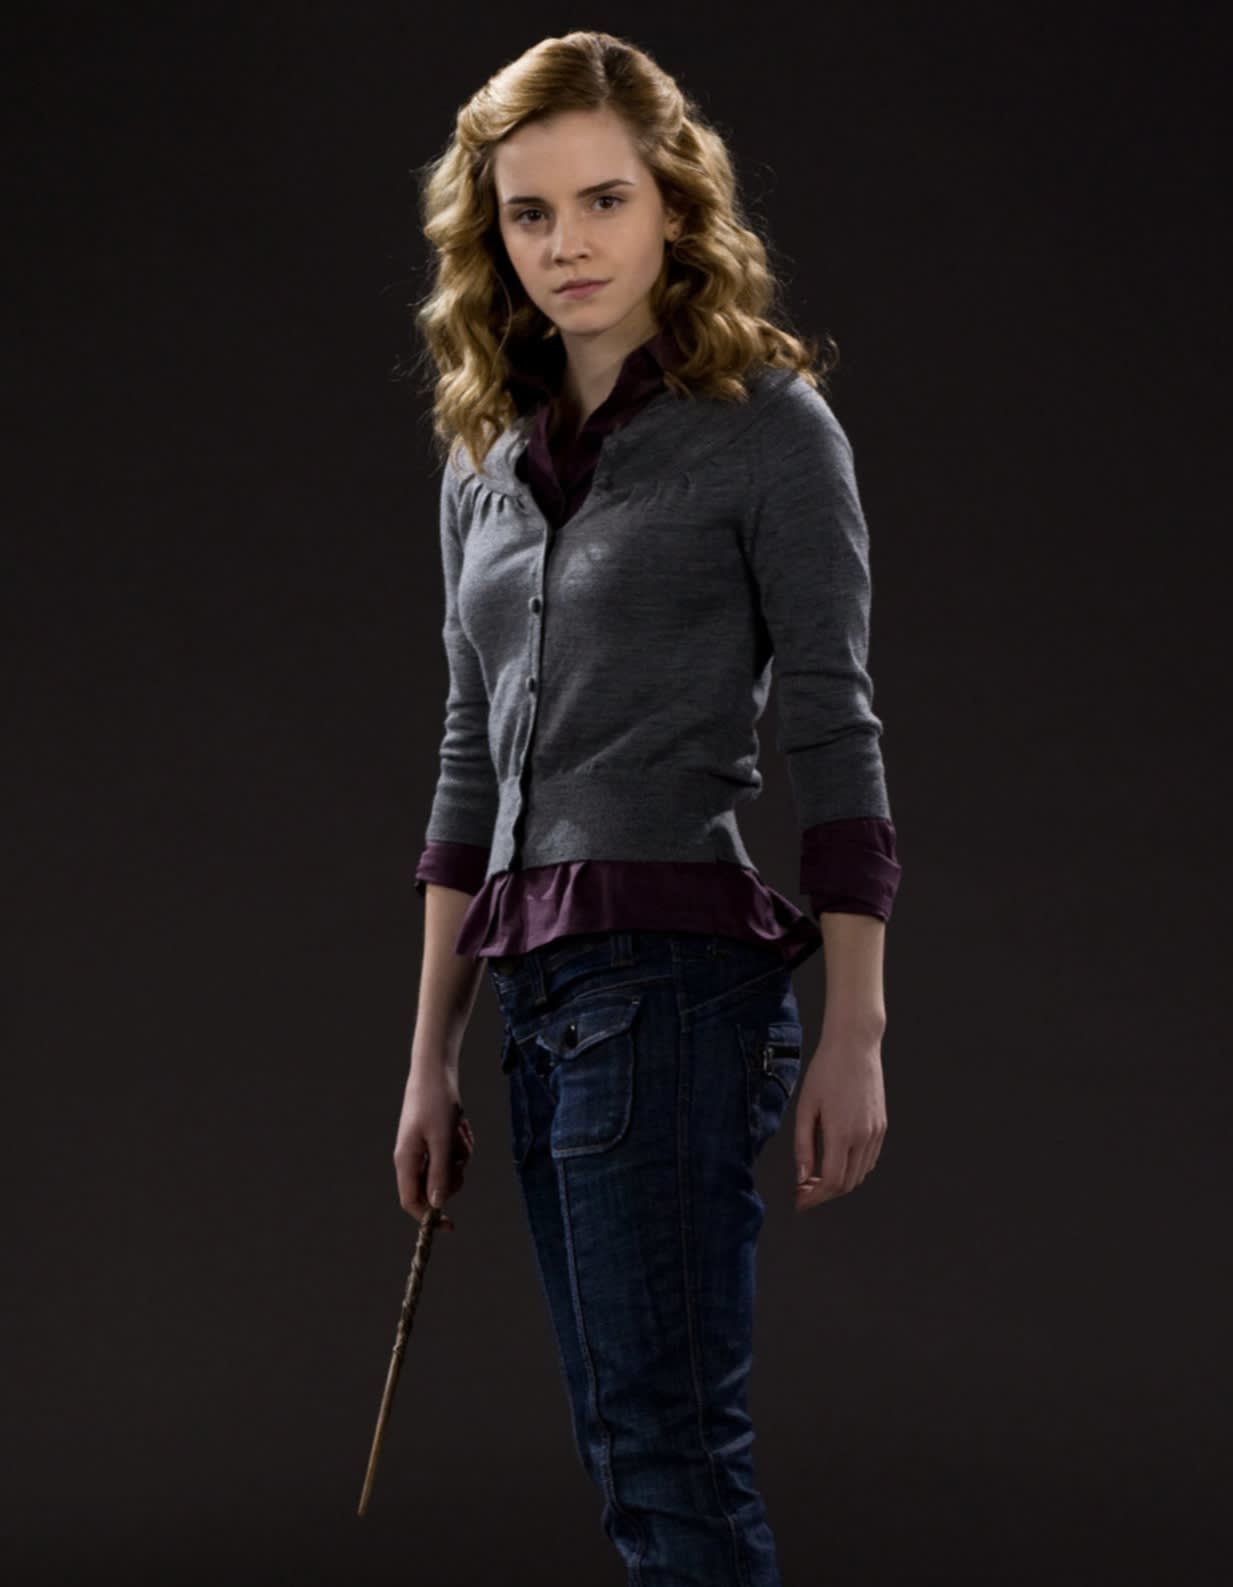 Hermione full body shot. 